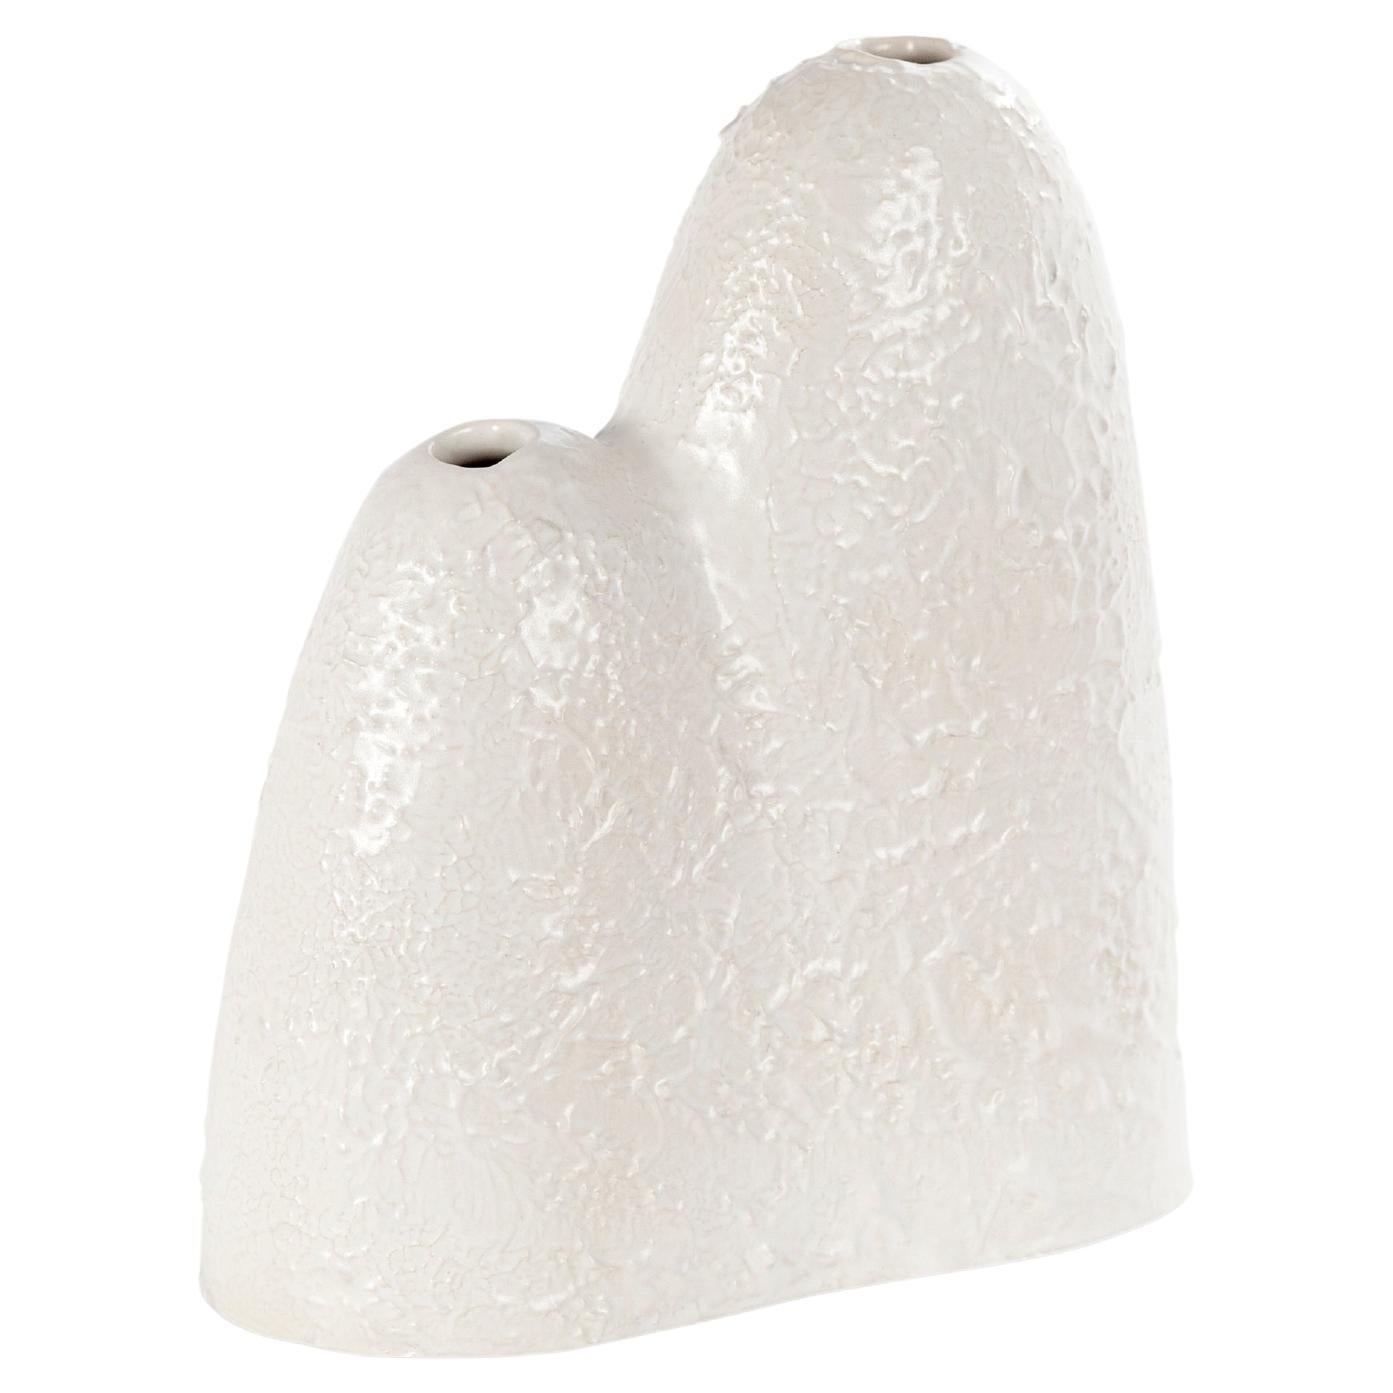 Mountain Small White Vase by Pulpo